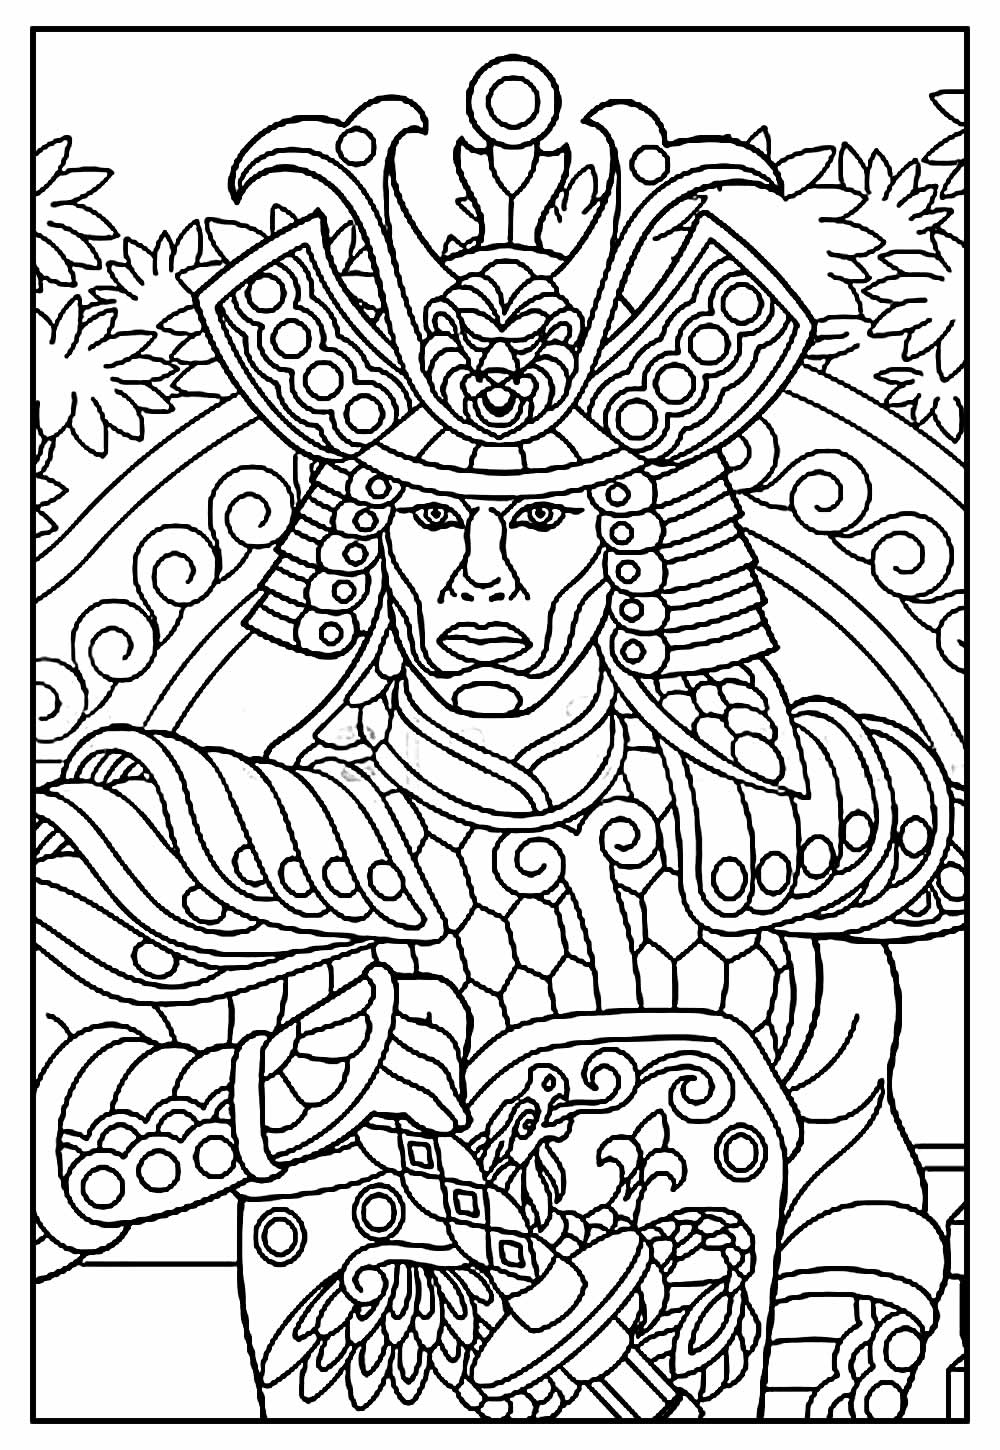 Desenho de Samurai adulto para Colorir - Colorir.com